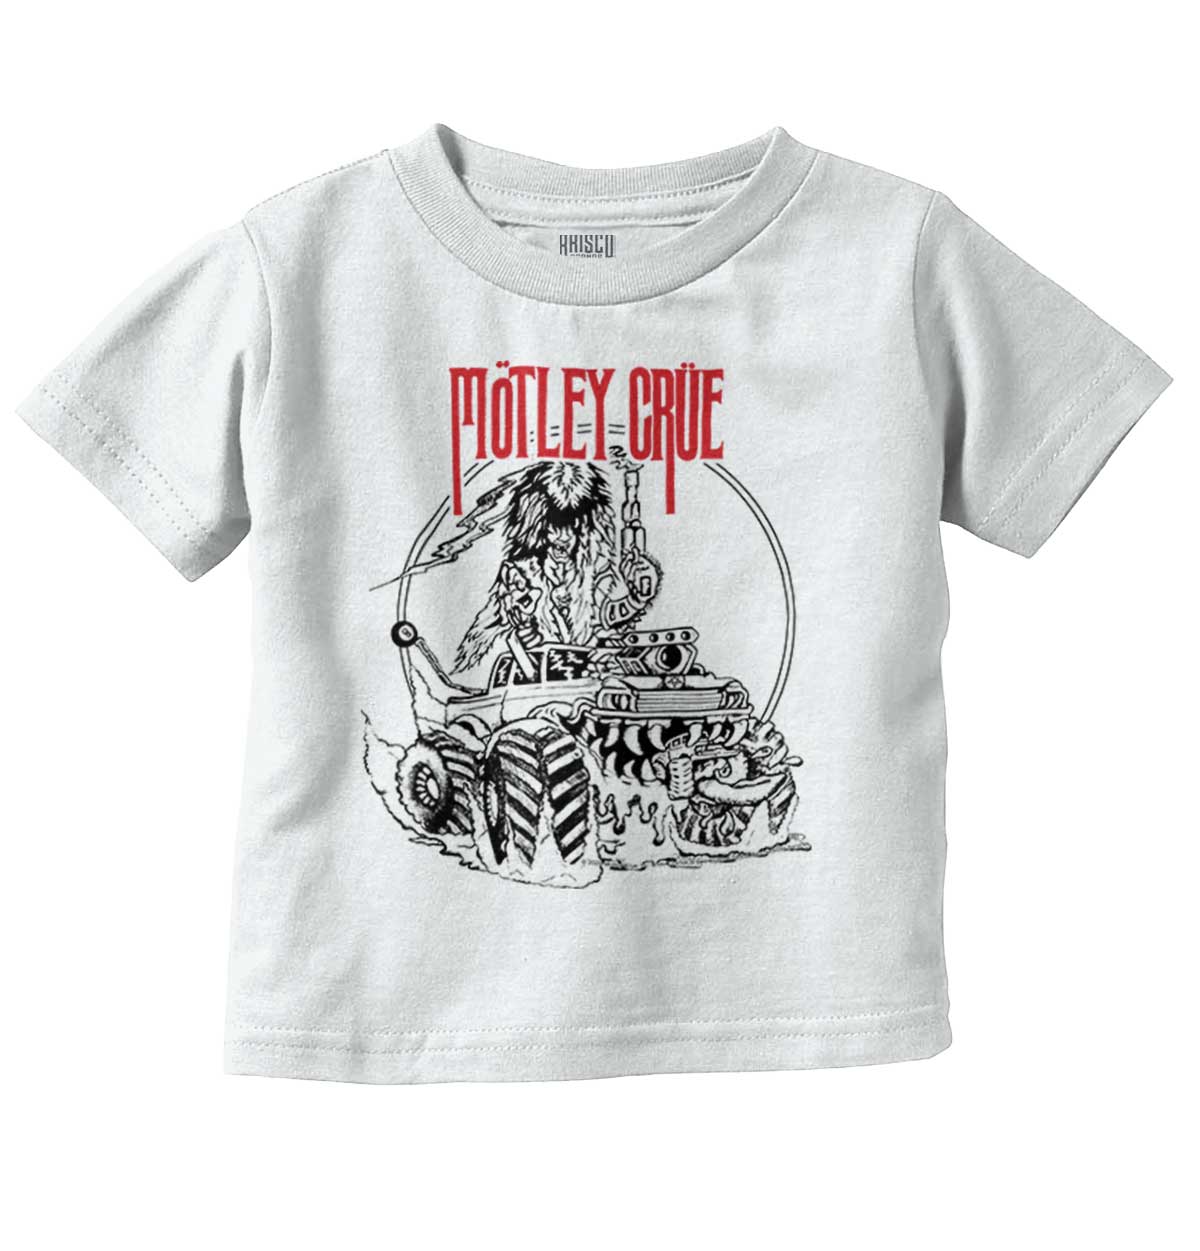 indre offer Ironisk Motley Crue Band Infant Toddler T Shirt | Brisco Baby